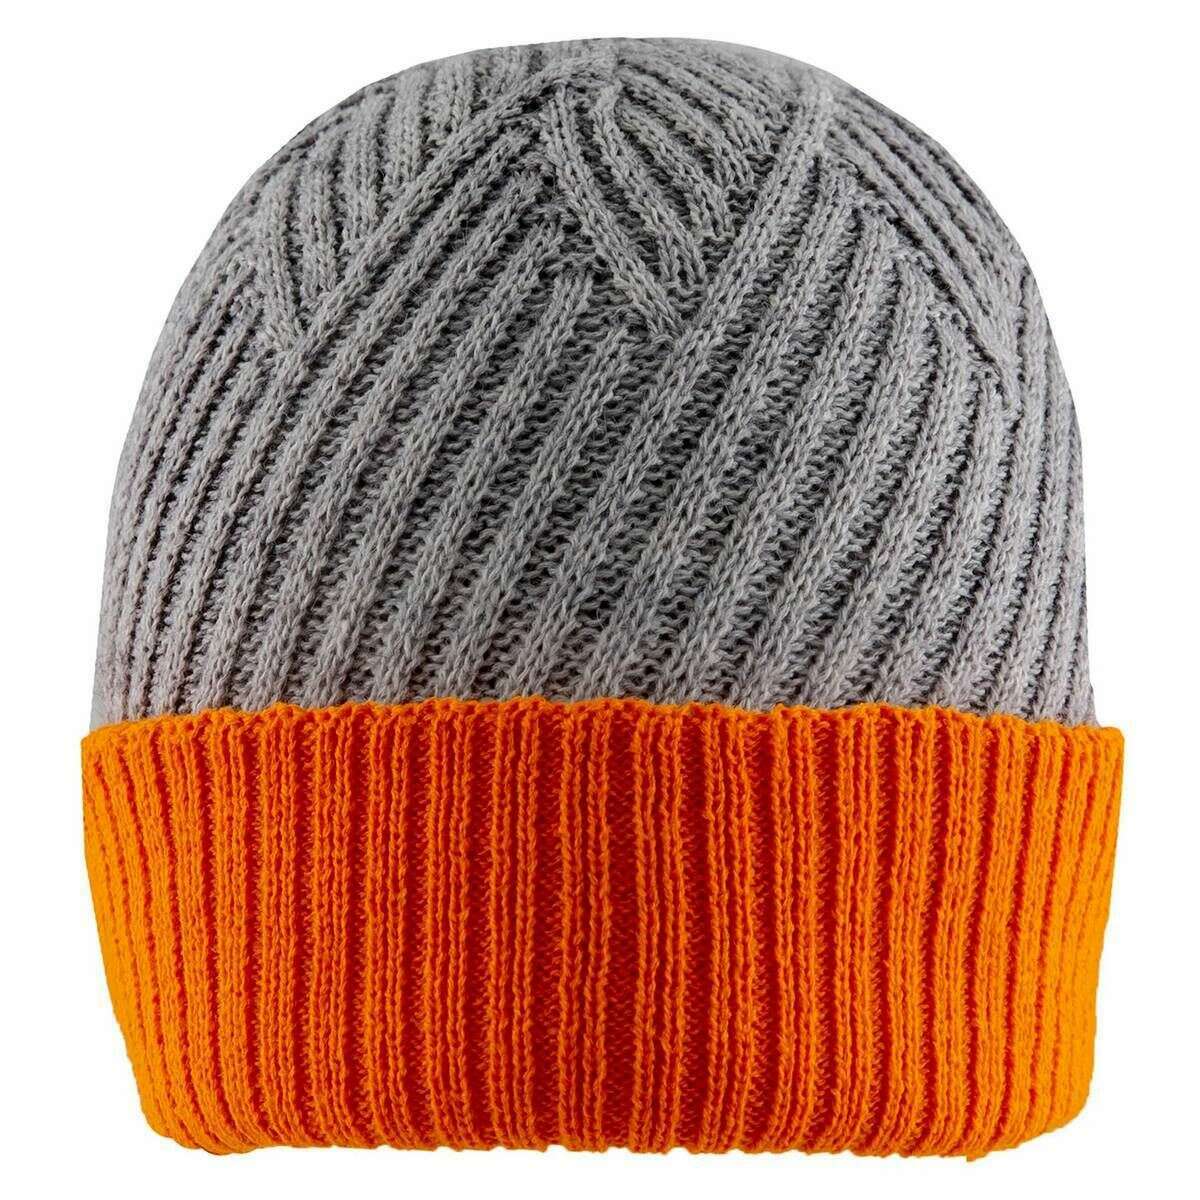 Dents Patchwork Cable Knit Beanie Hat - Dove Grey/Tangerine Orange